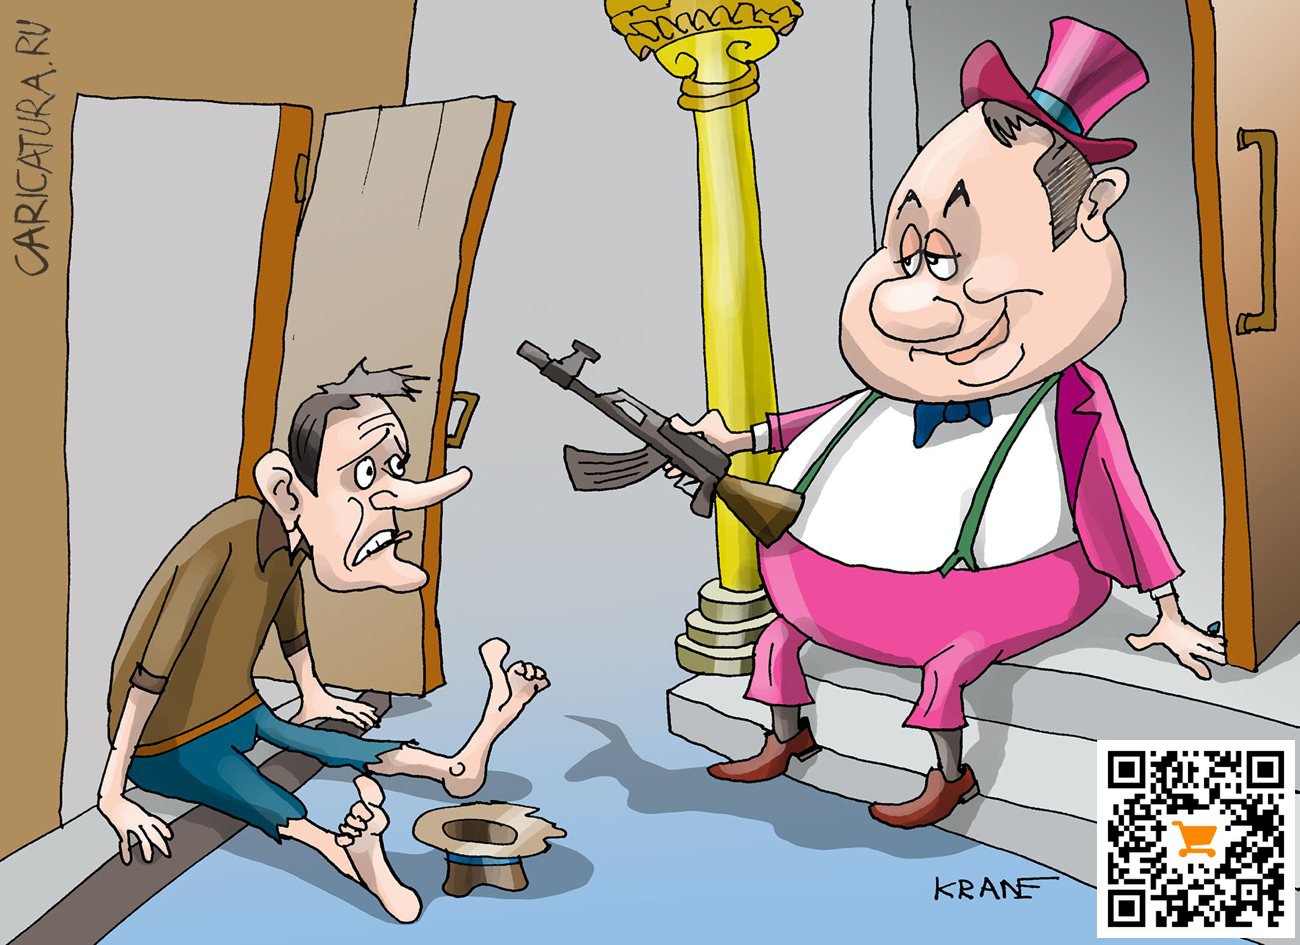 Карикатура "Помощь нуждающимся", Евгений Кран